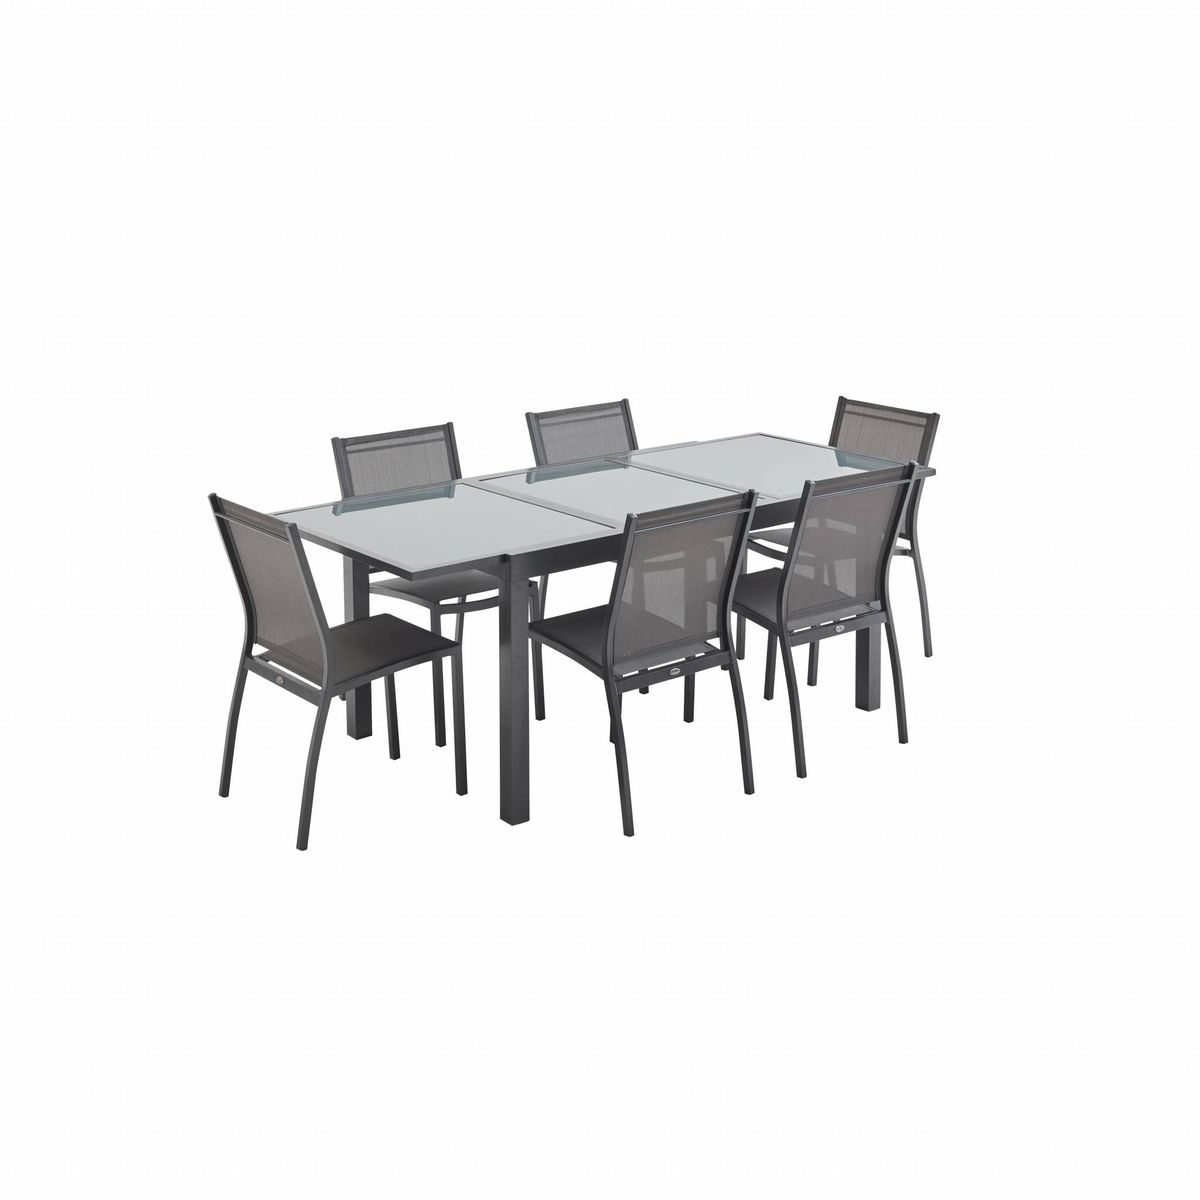 Alice's Garden Salon de jardin table extensible - Orlando  - Table en aluminium 150/210cm et 6 chaises en textilène